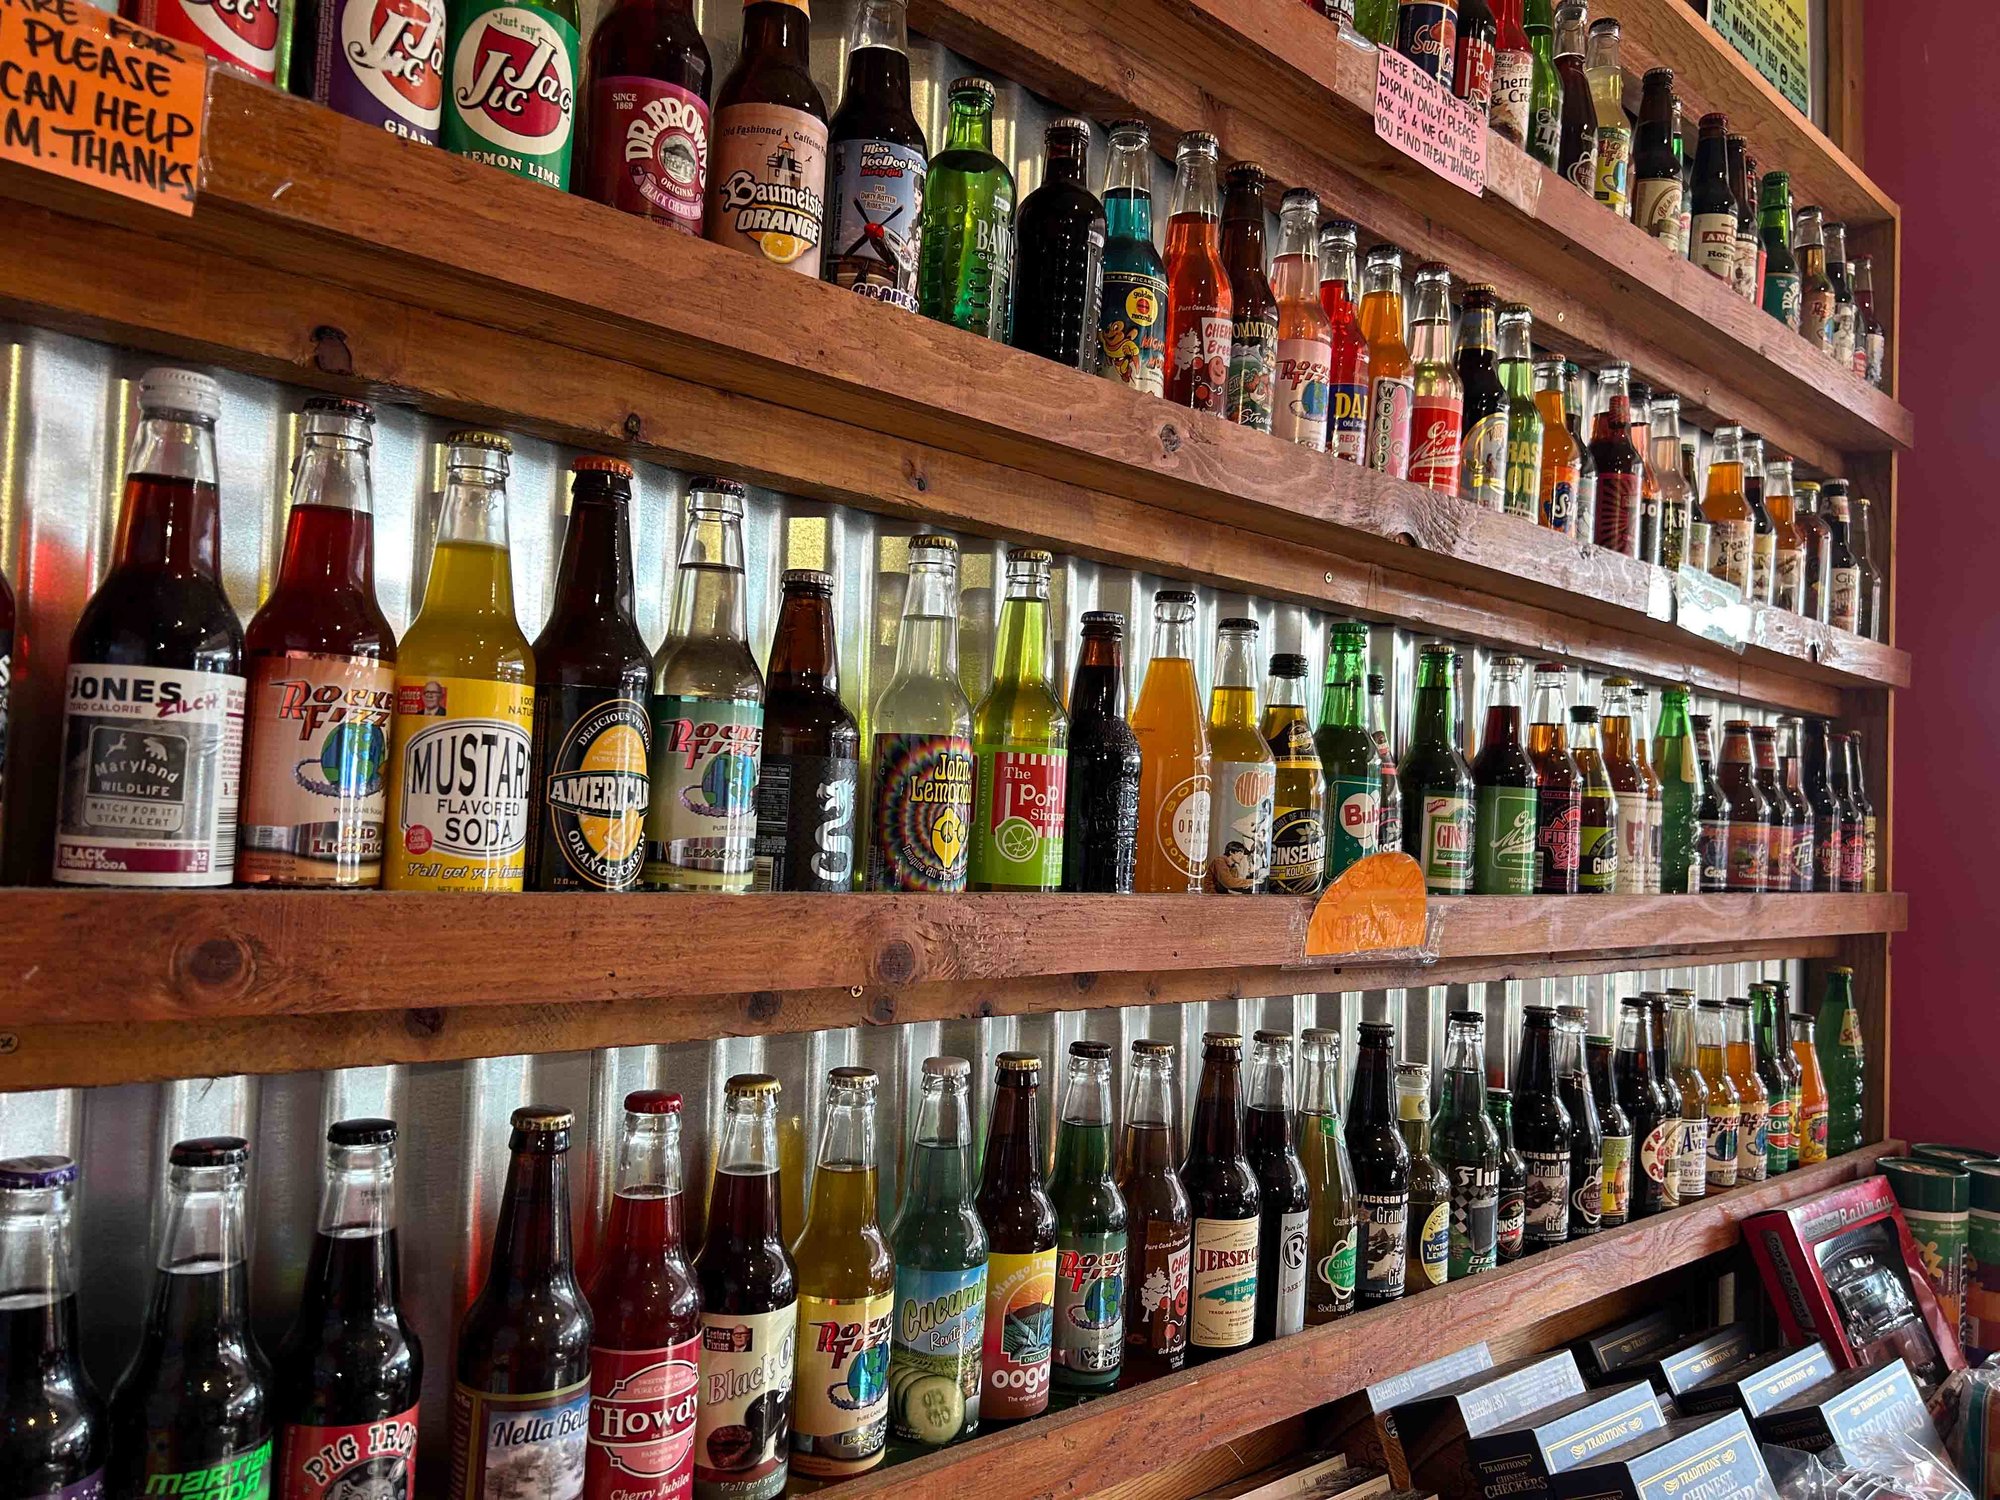 Row of sodas on shelf